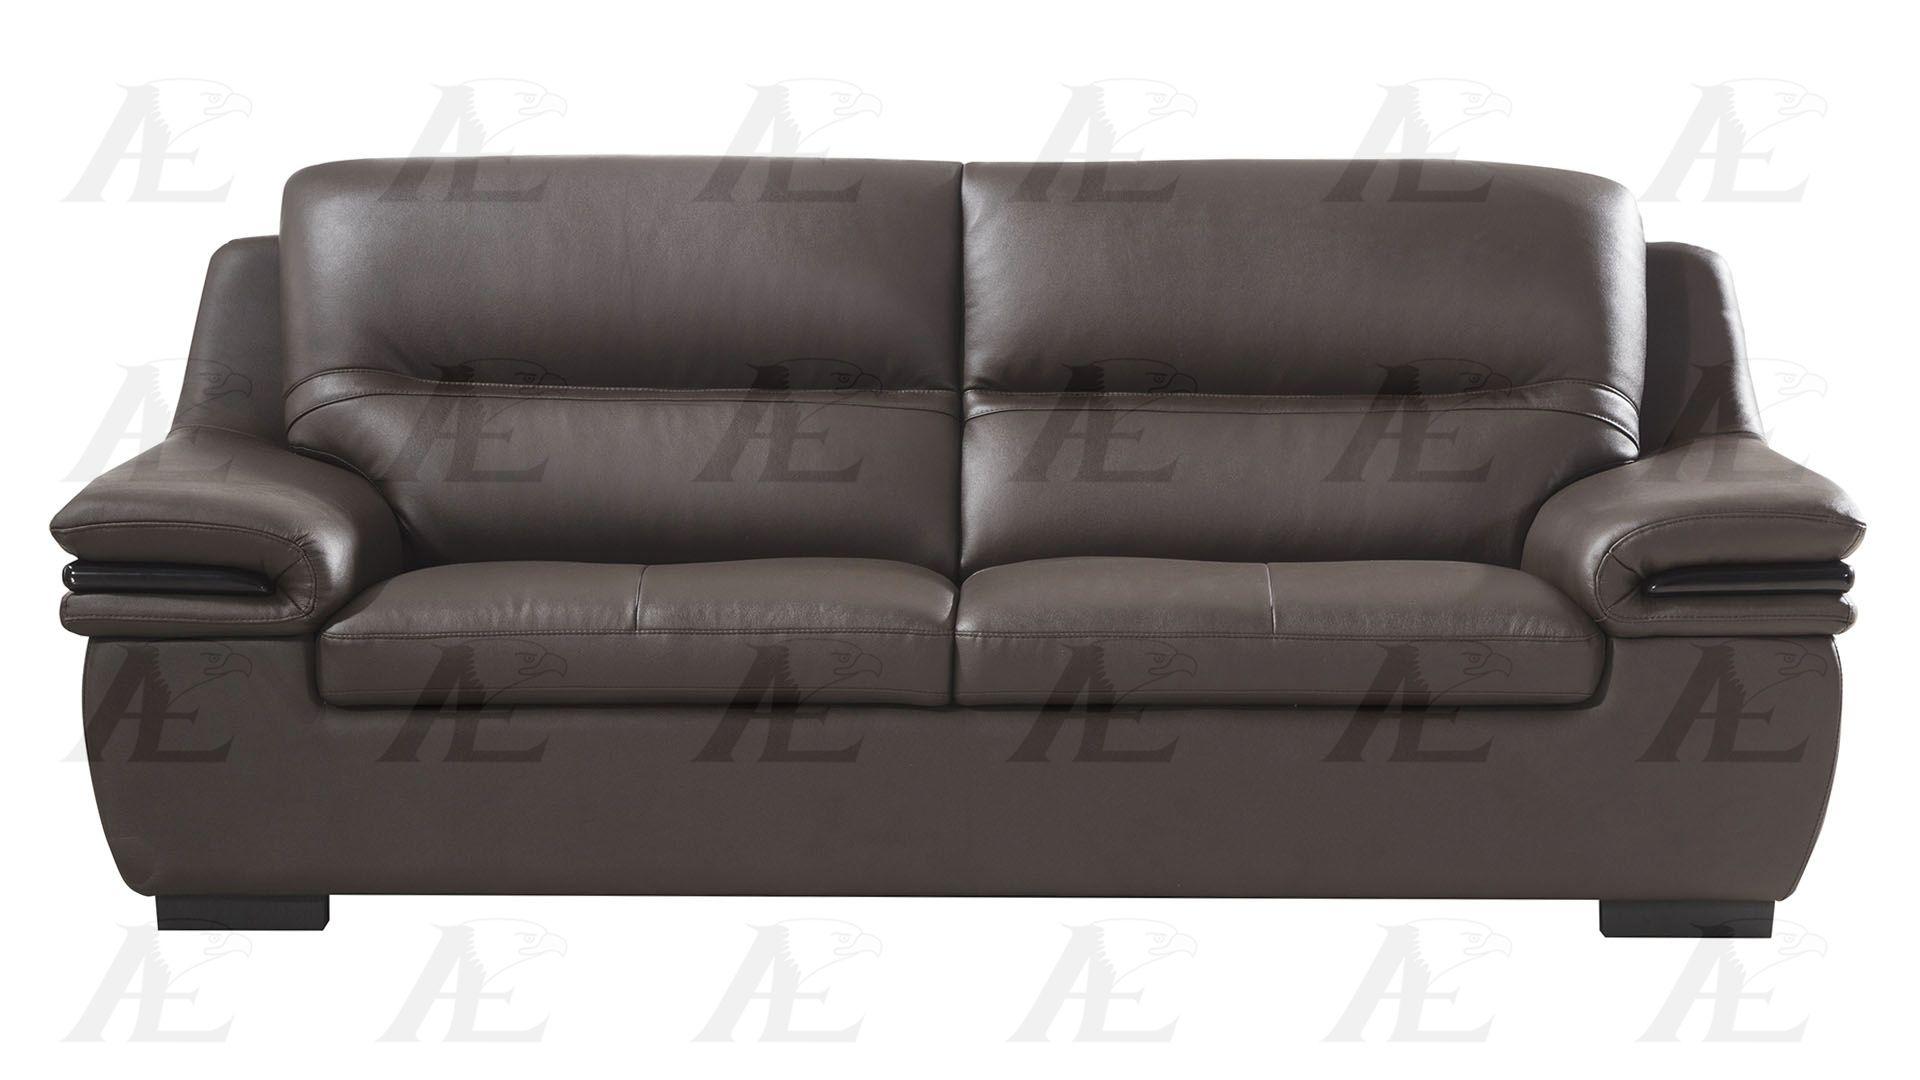 

    
American Eagle EK-B113 Dark Chocolate Genuine Leather Living Room Sofa Set 2pcs in Modern Style
